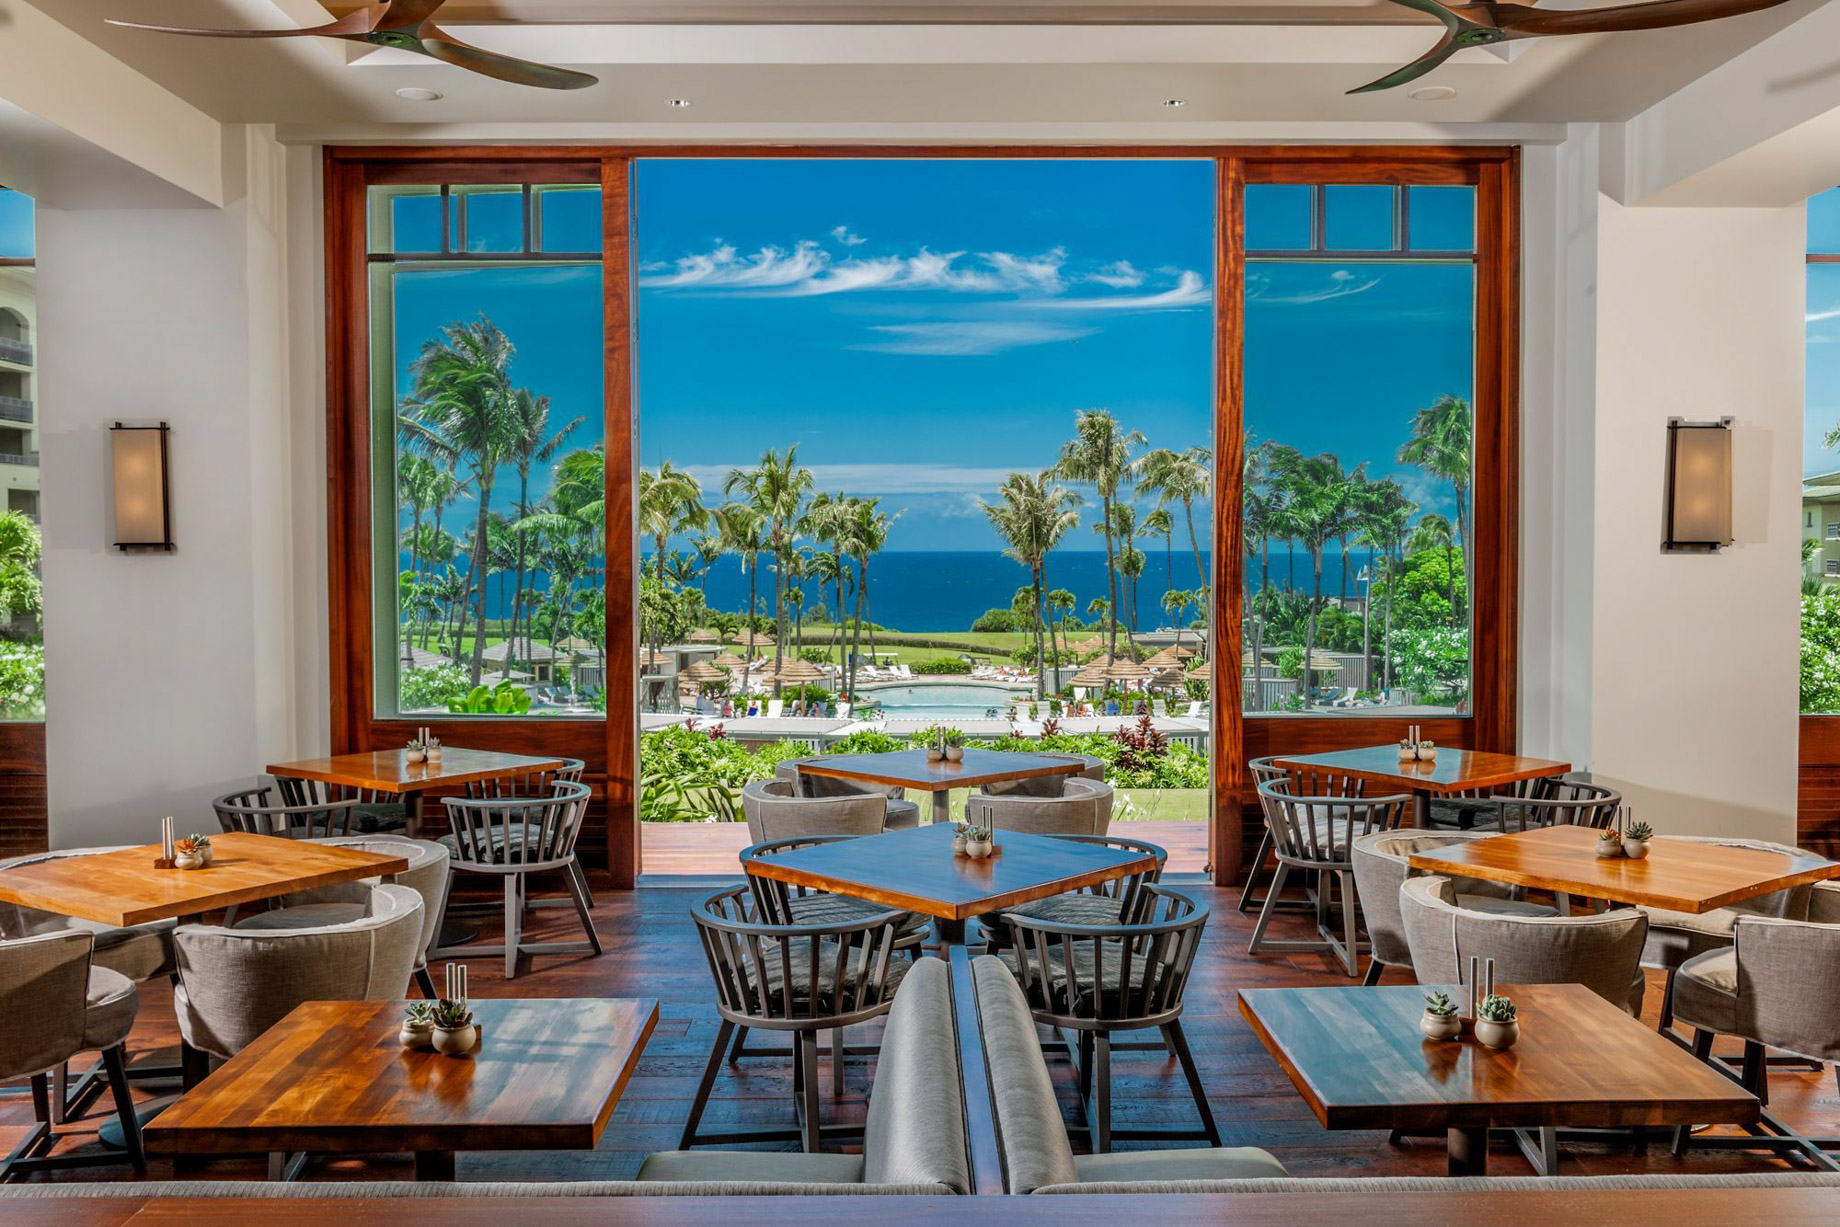 The Ritz-Carlton Maui, Kapalua Resort - Kapalua, HI, USA - Ulana